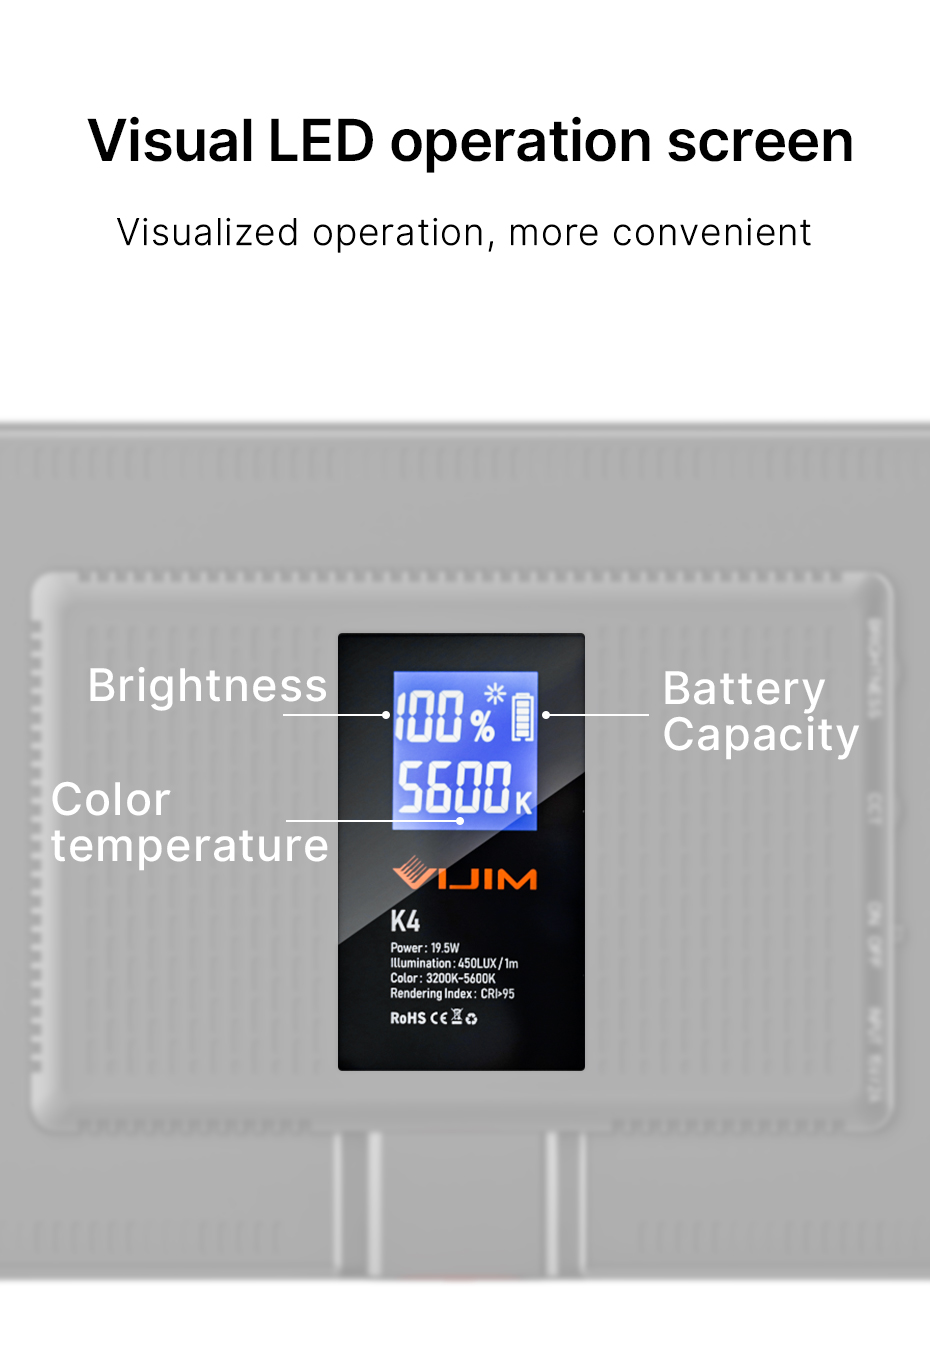 Ulanzi-VIJIM-K4-8000mAh-Rechargeable-Key-Light-Brightness-Color-Temperature-Adjustable-LED-Video-Lig-1886424-9